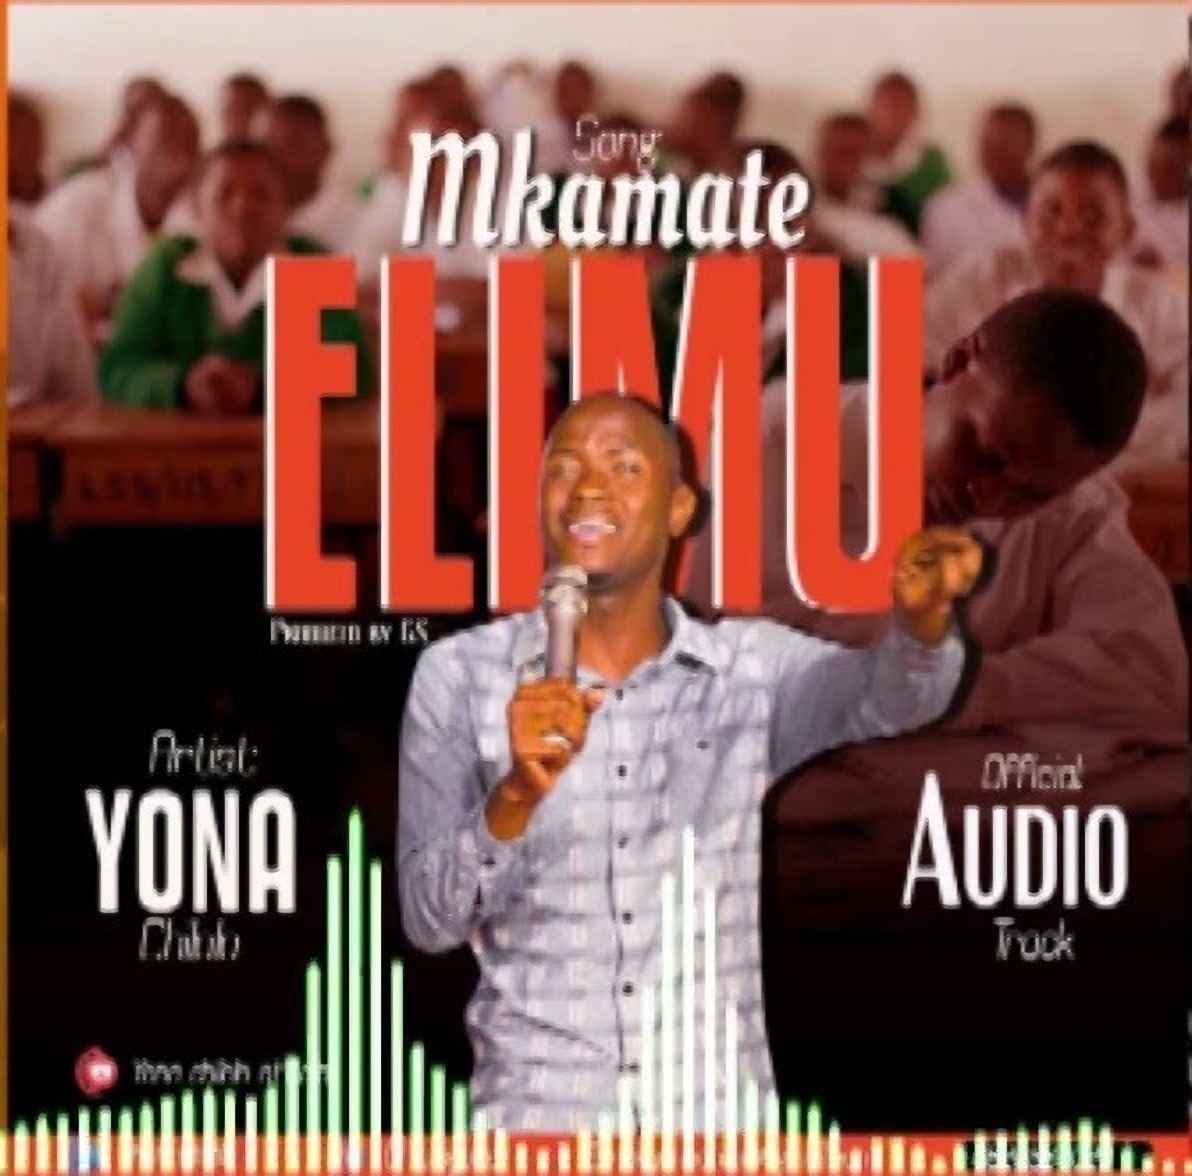 Yona Chilolo - Mkamate Elimu Mp3 Download